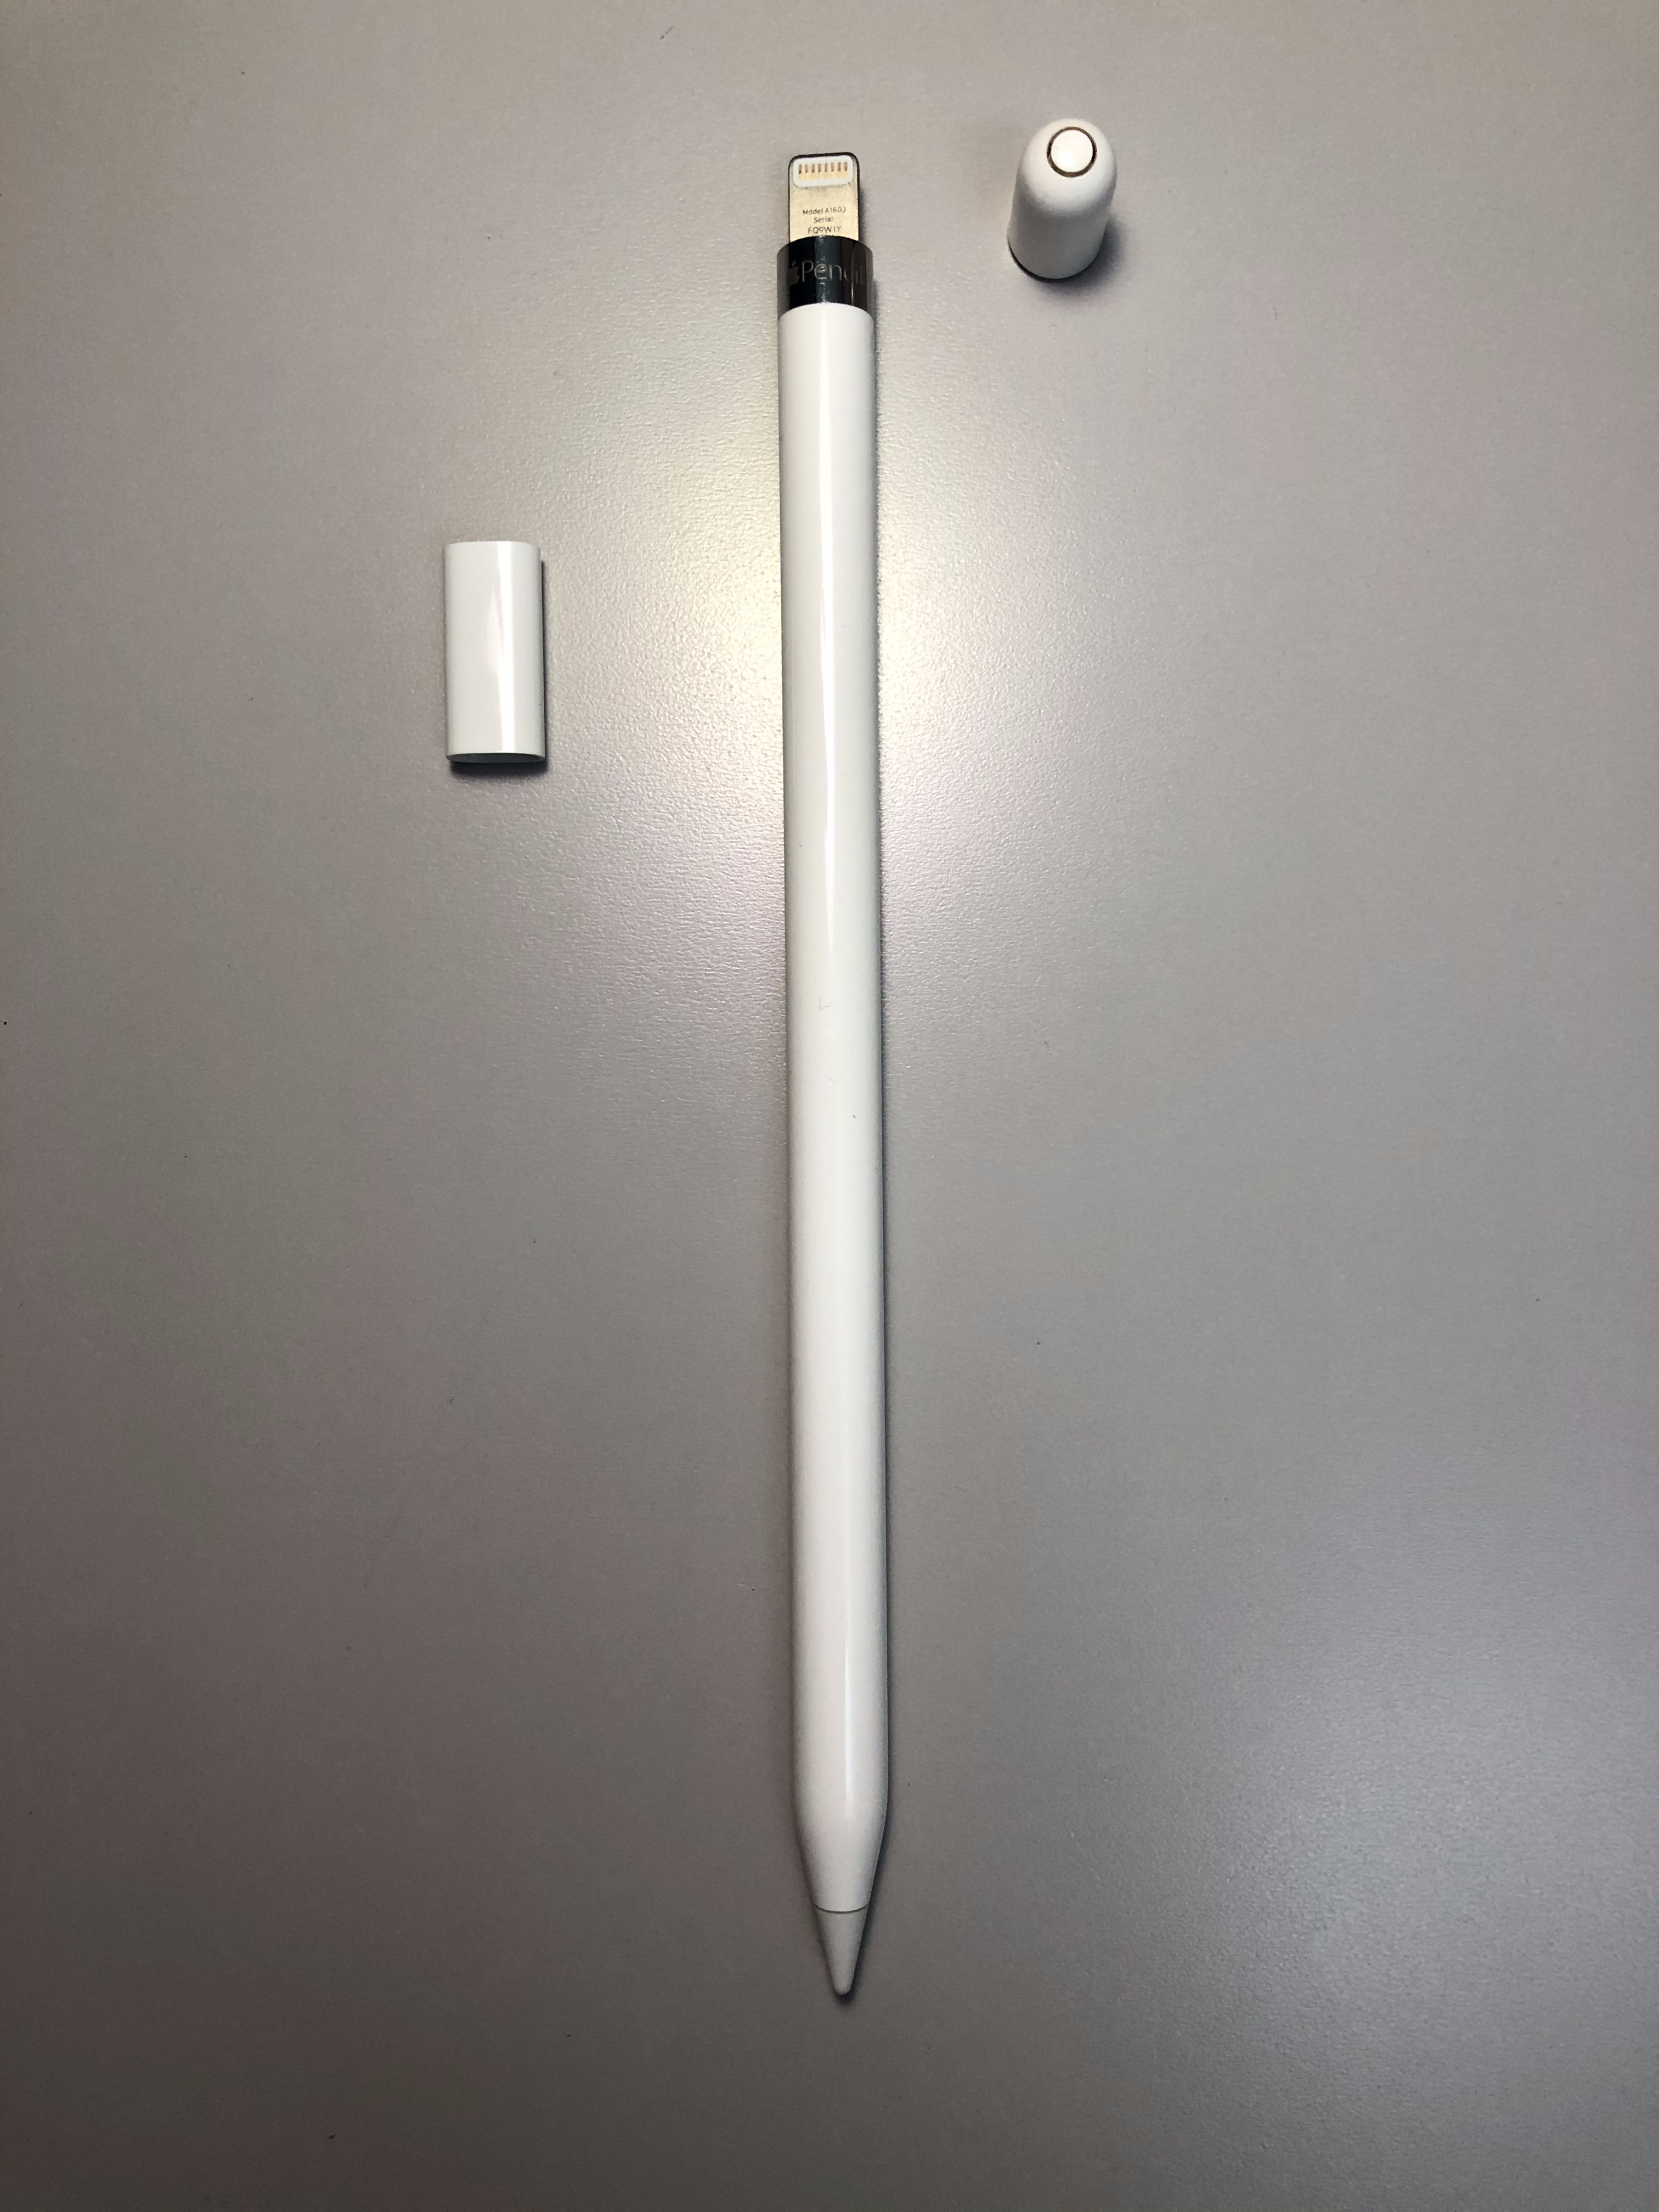 Apple Pencil - Wikipedia